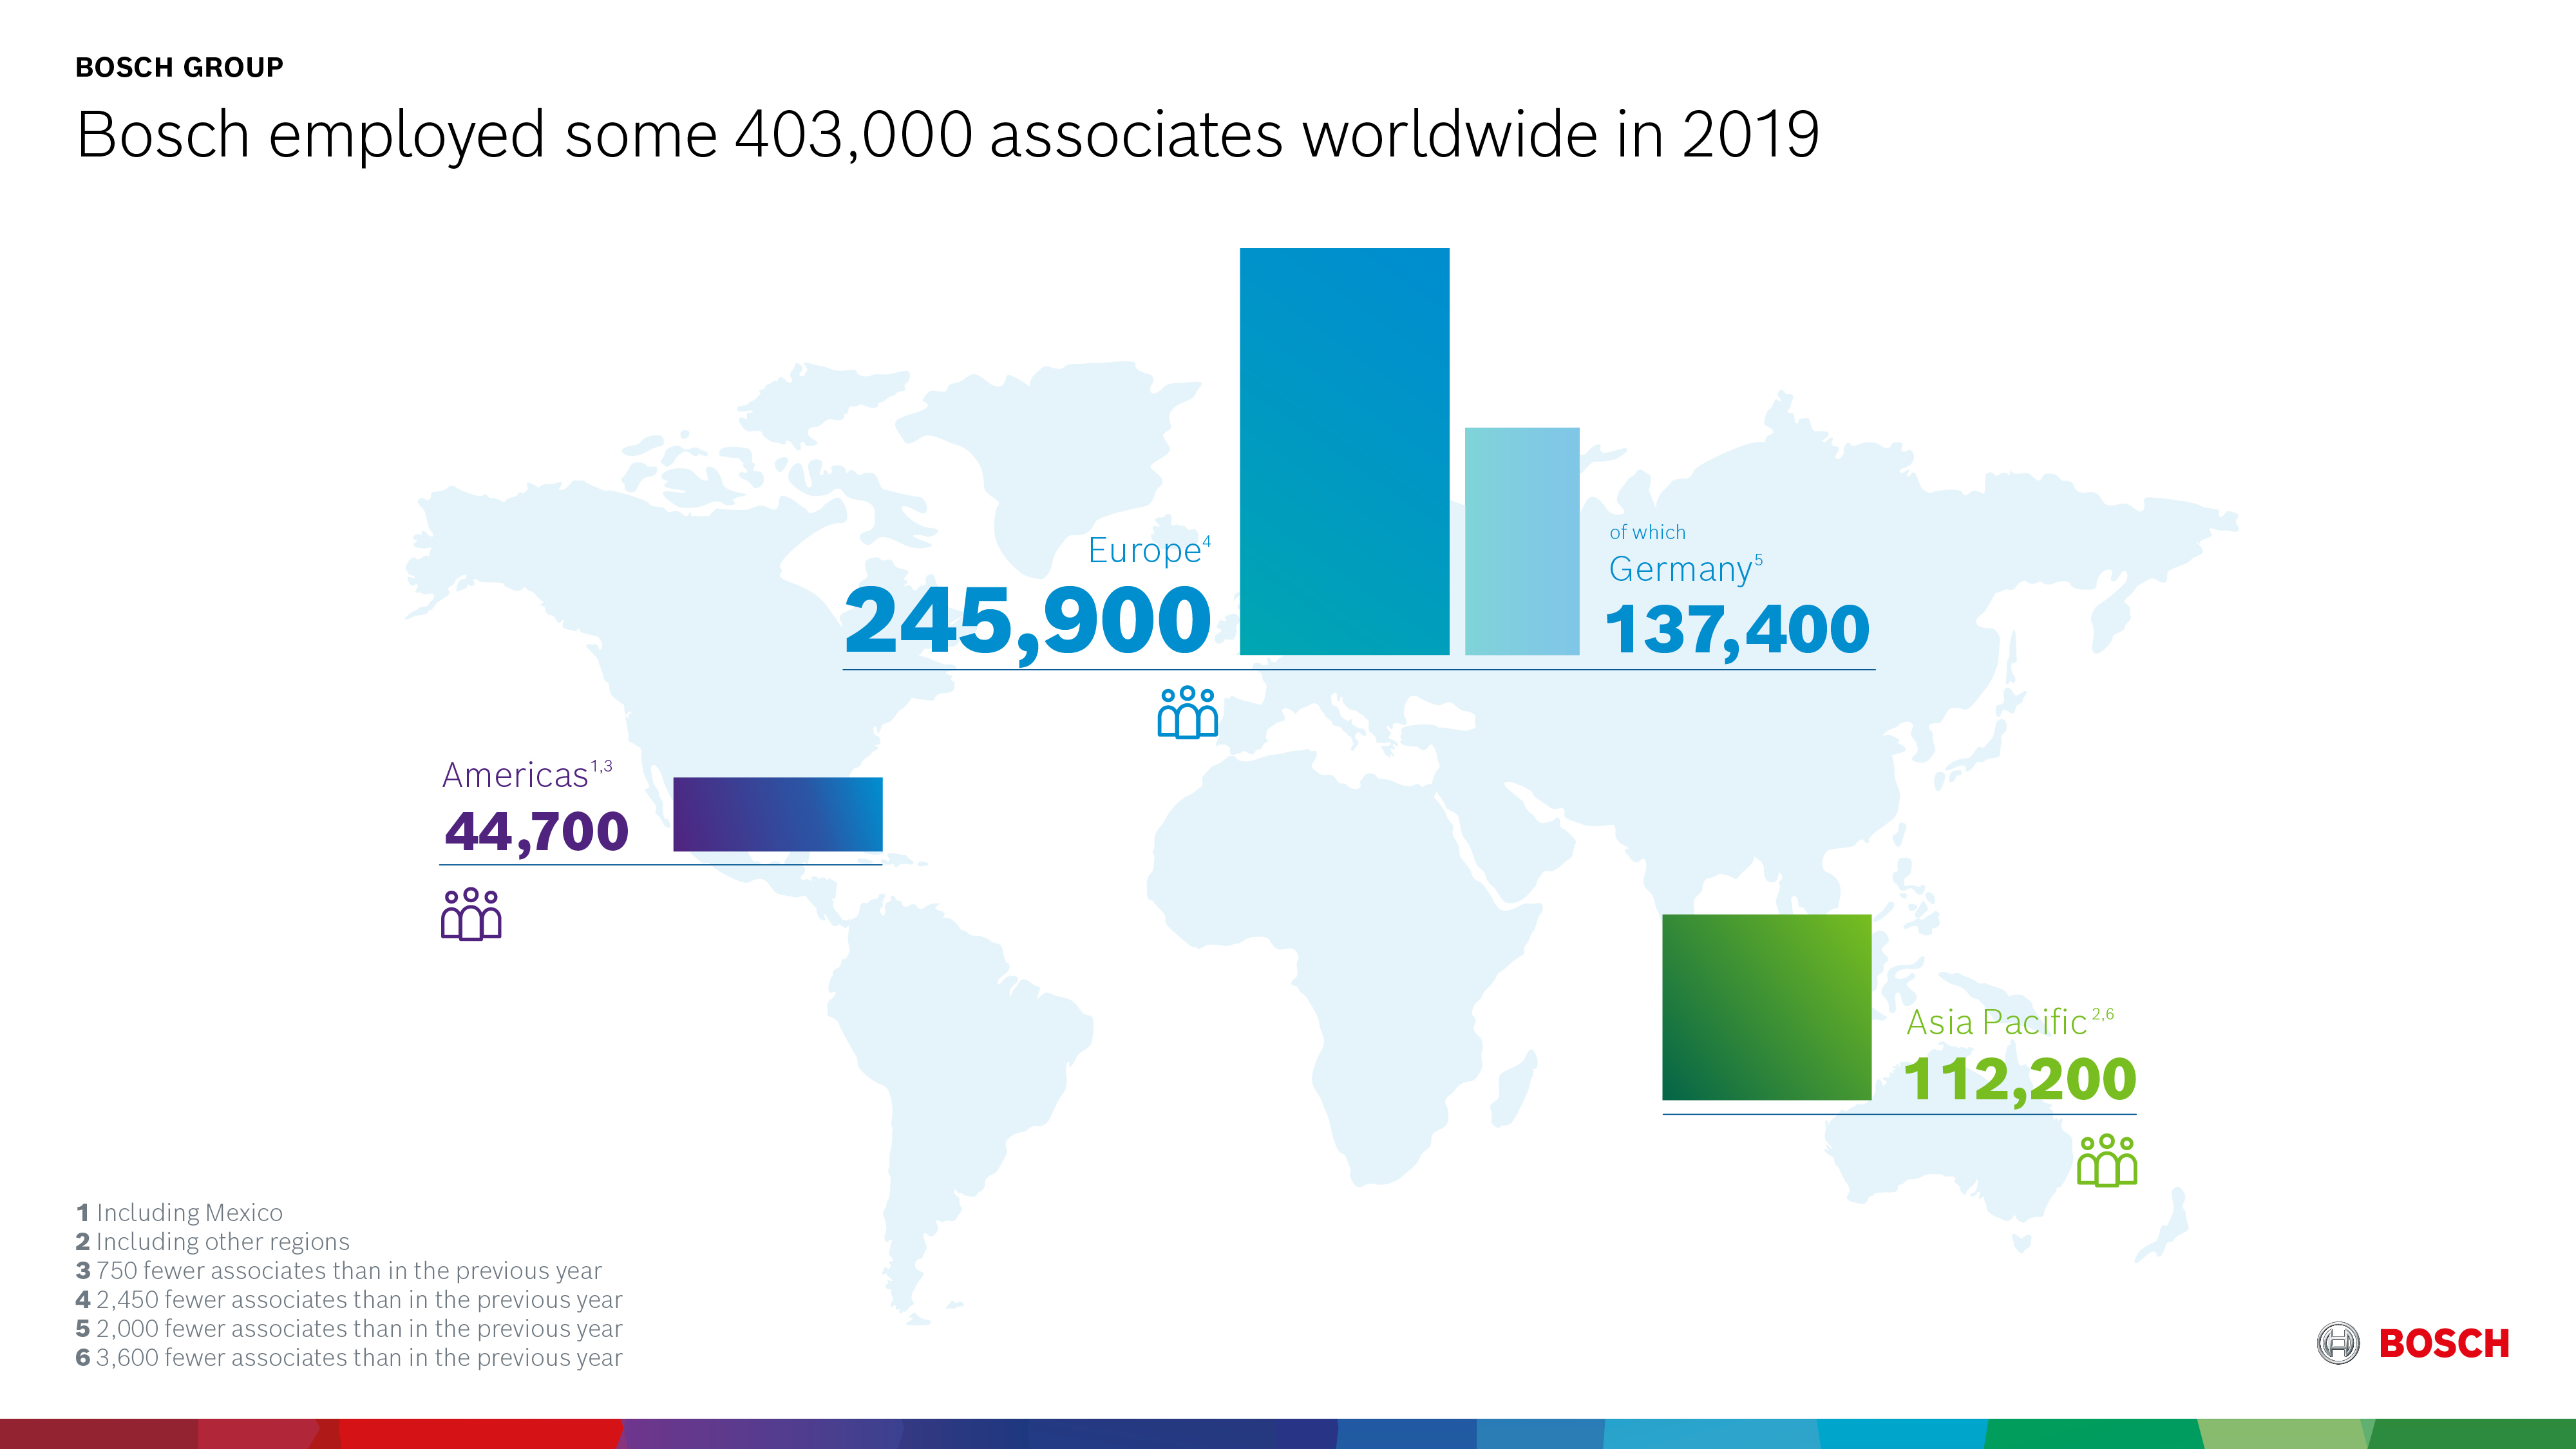 Bosch employed some 403,000 associates worldwide in 2019.